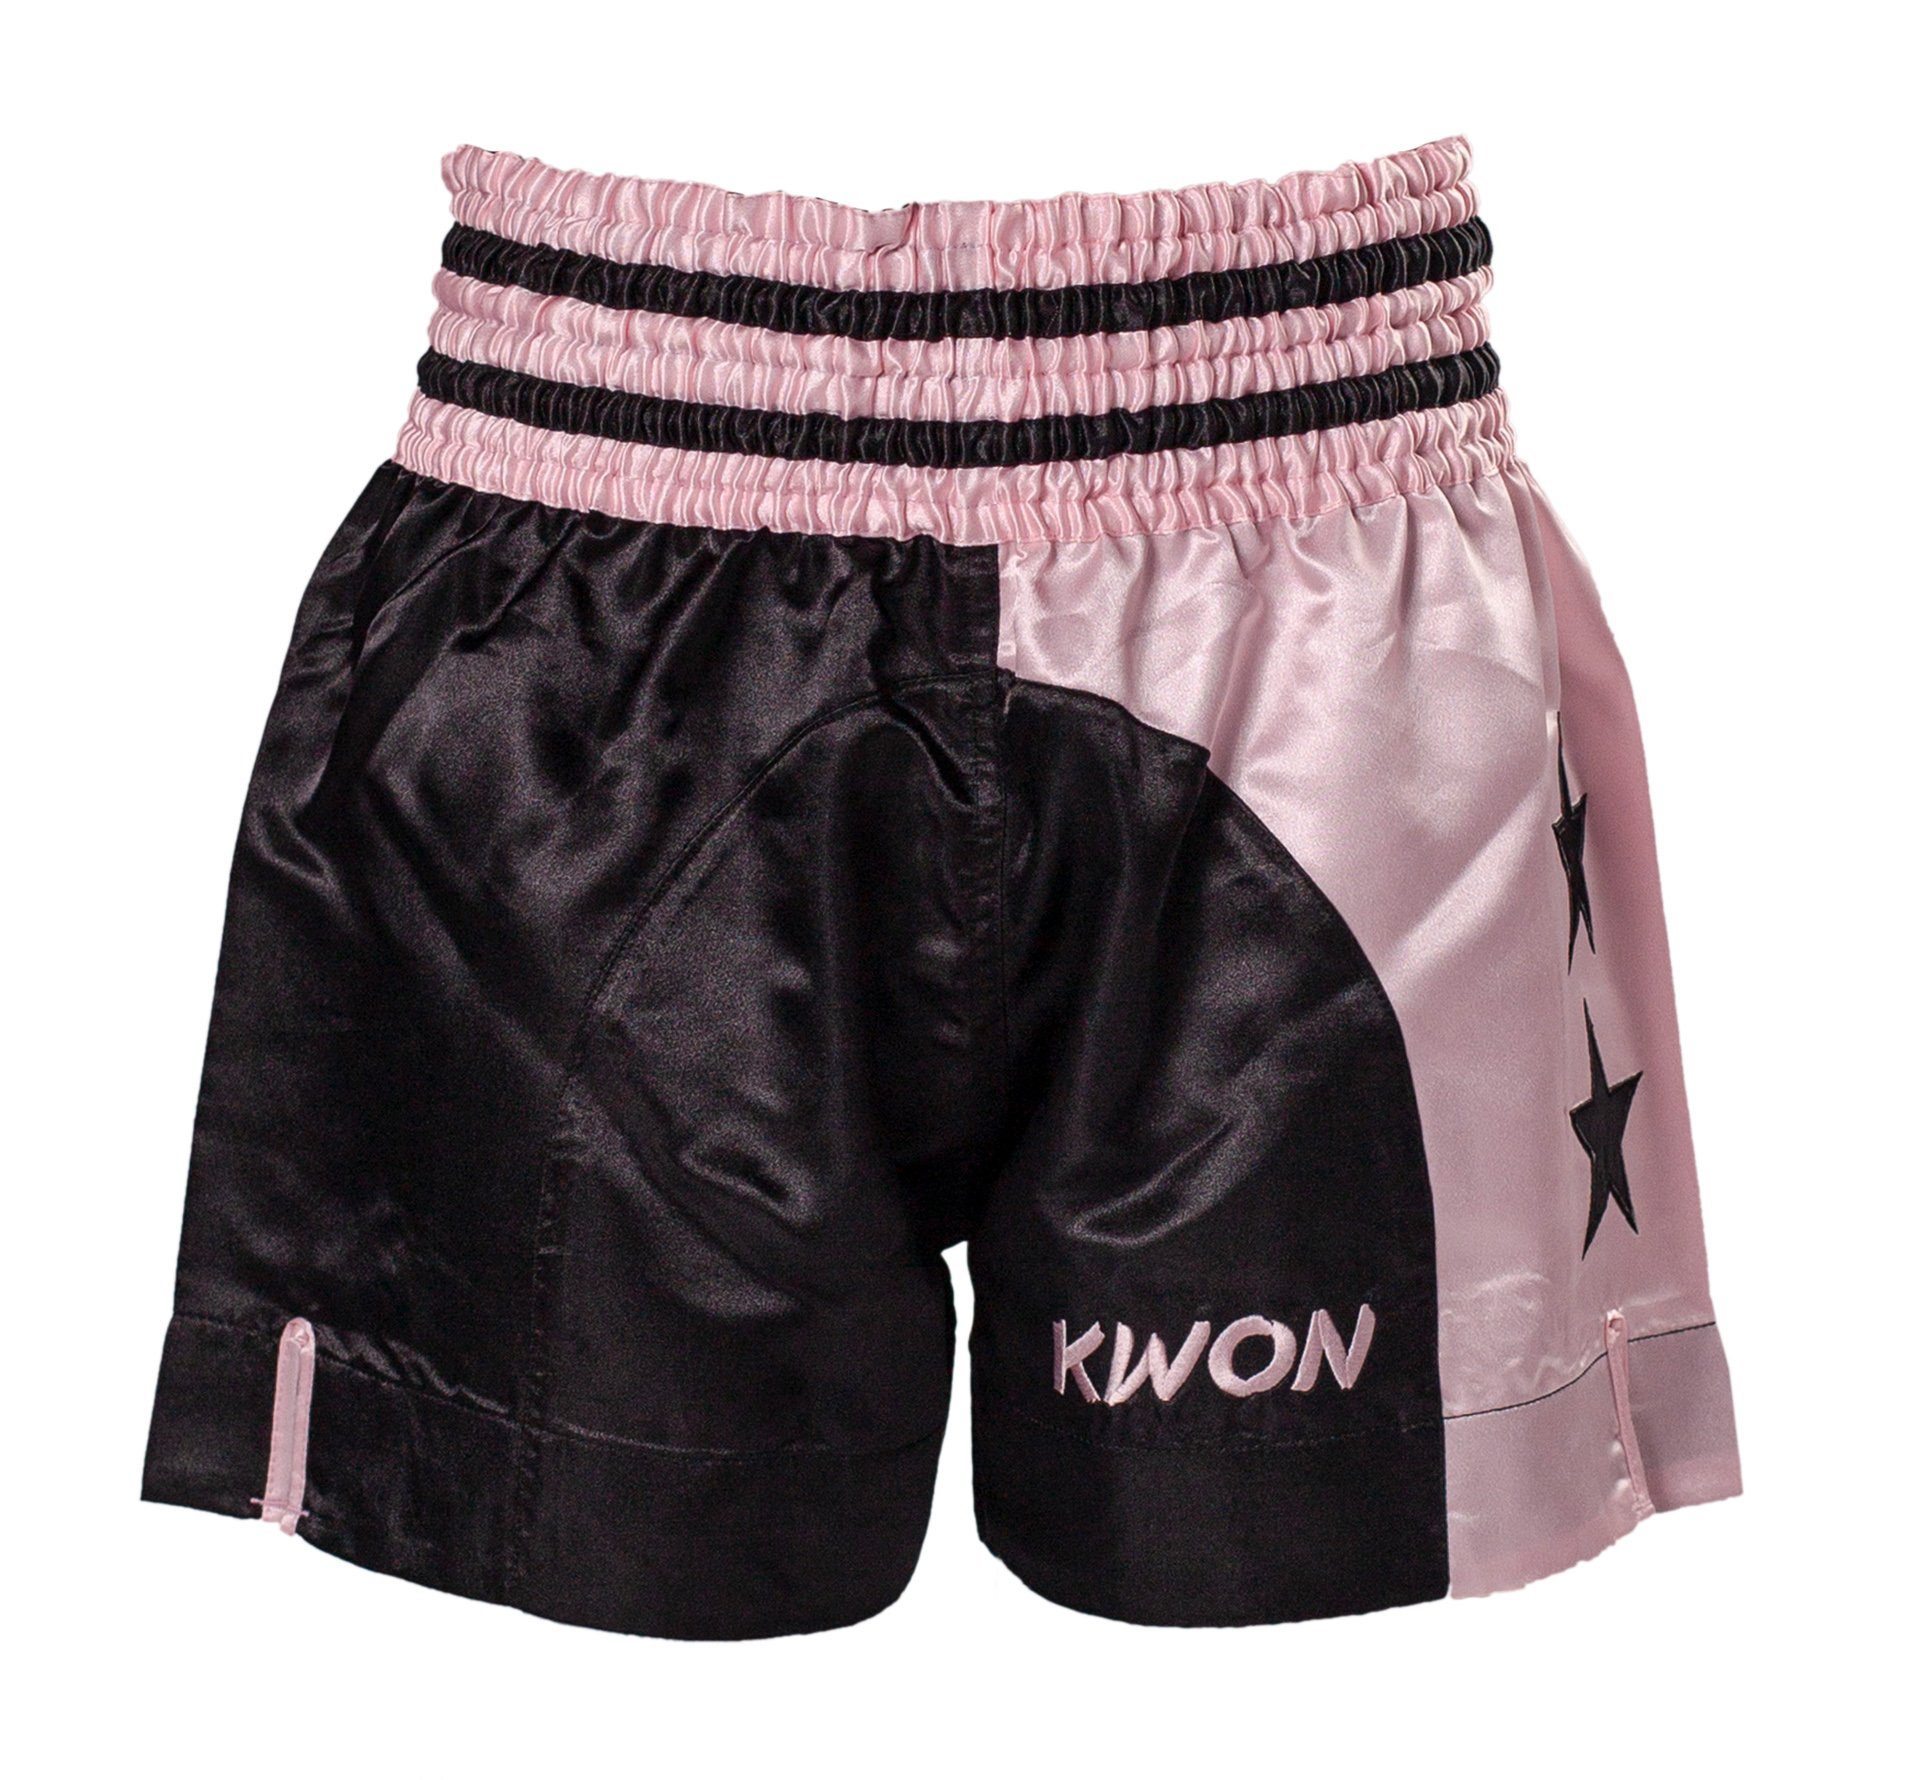 KWON Sporthose Thaiboxhose Damen Muay Thai Box Shorts Kickboxhose kurz pink rosa MMA (Edler Look) traditioneller Schnitt, Sterne